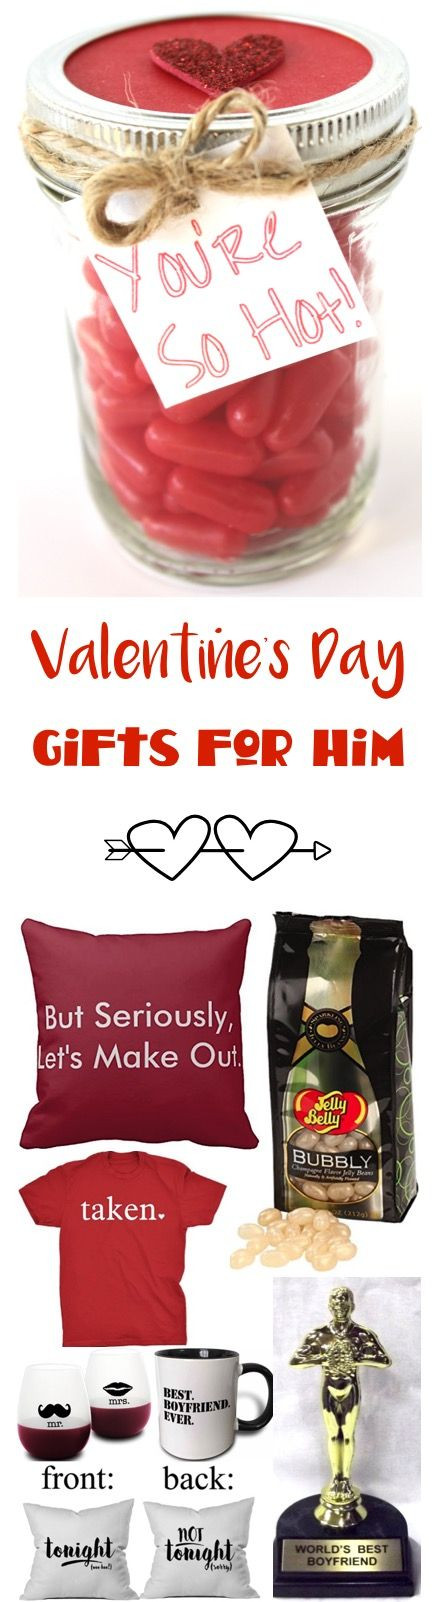 Romantic Boyfriend Gift Ideas
 17 Best ideas about Romantic Gifts on Pinterest